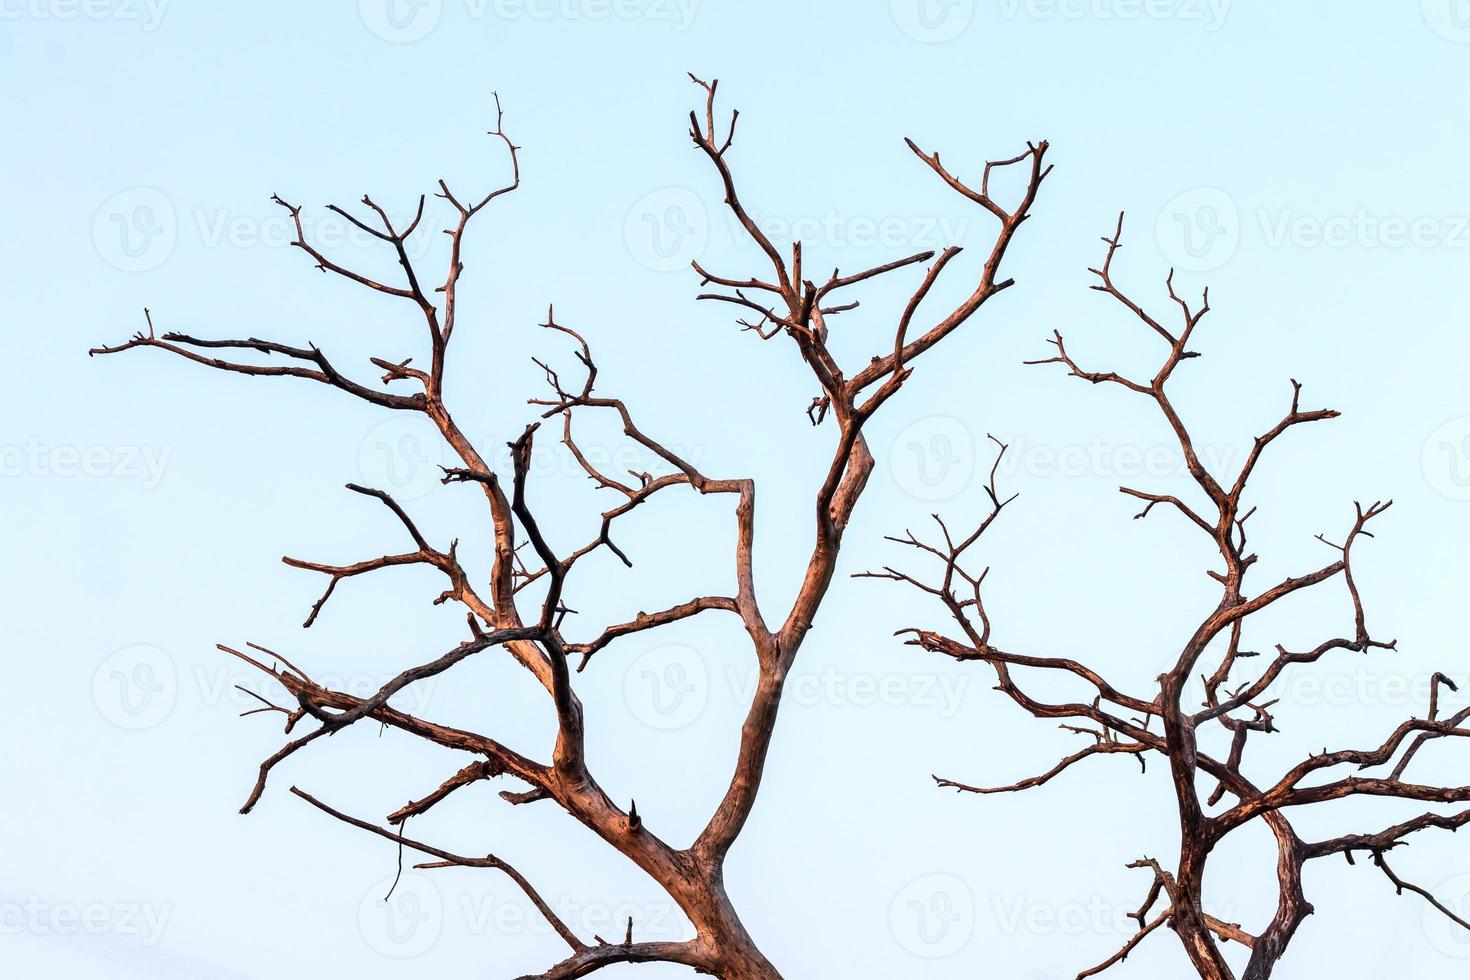 primer plano de ramas secas muertas. foto